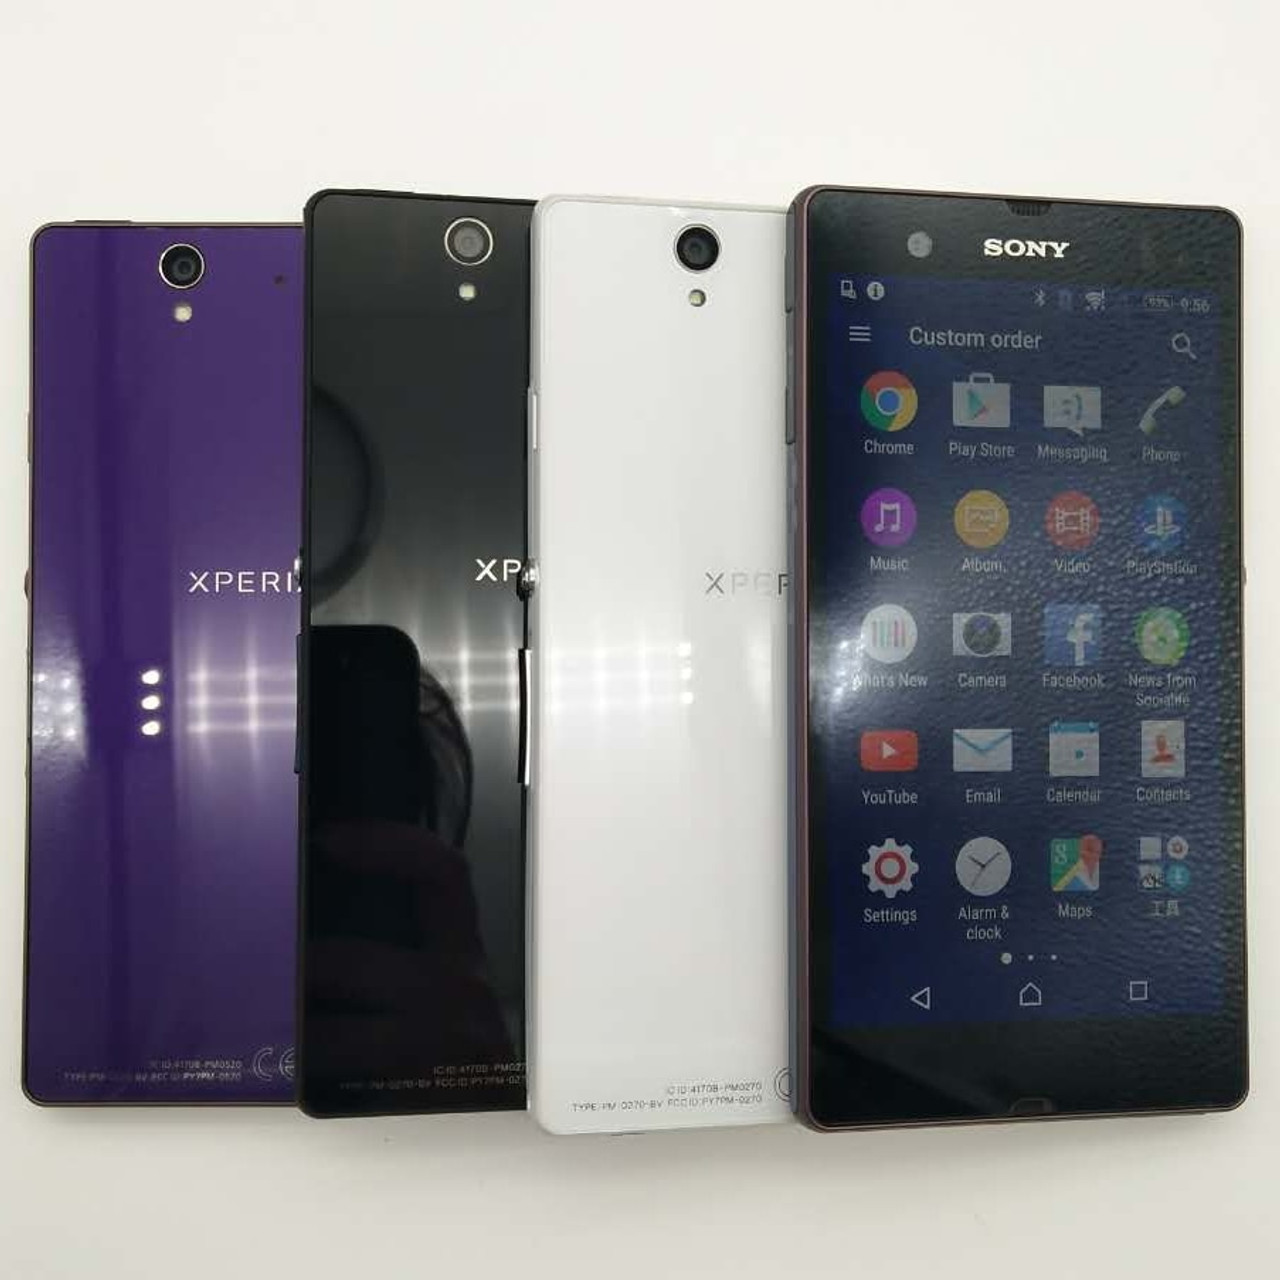 Sony Xperia Z L36h Mobile phone 16GB ROM 13.1MP Unlocked - Kenny Jacks Market Place